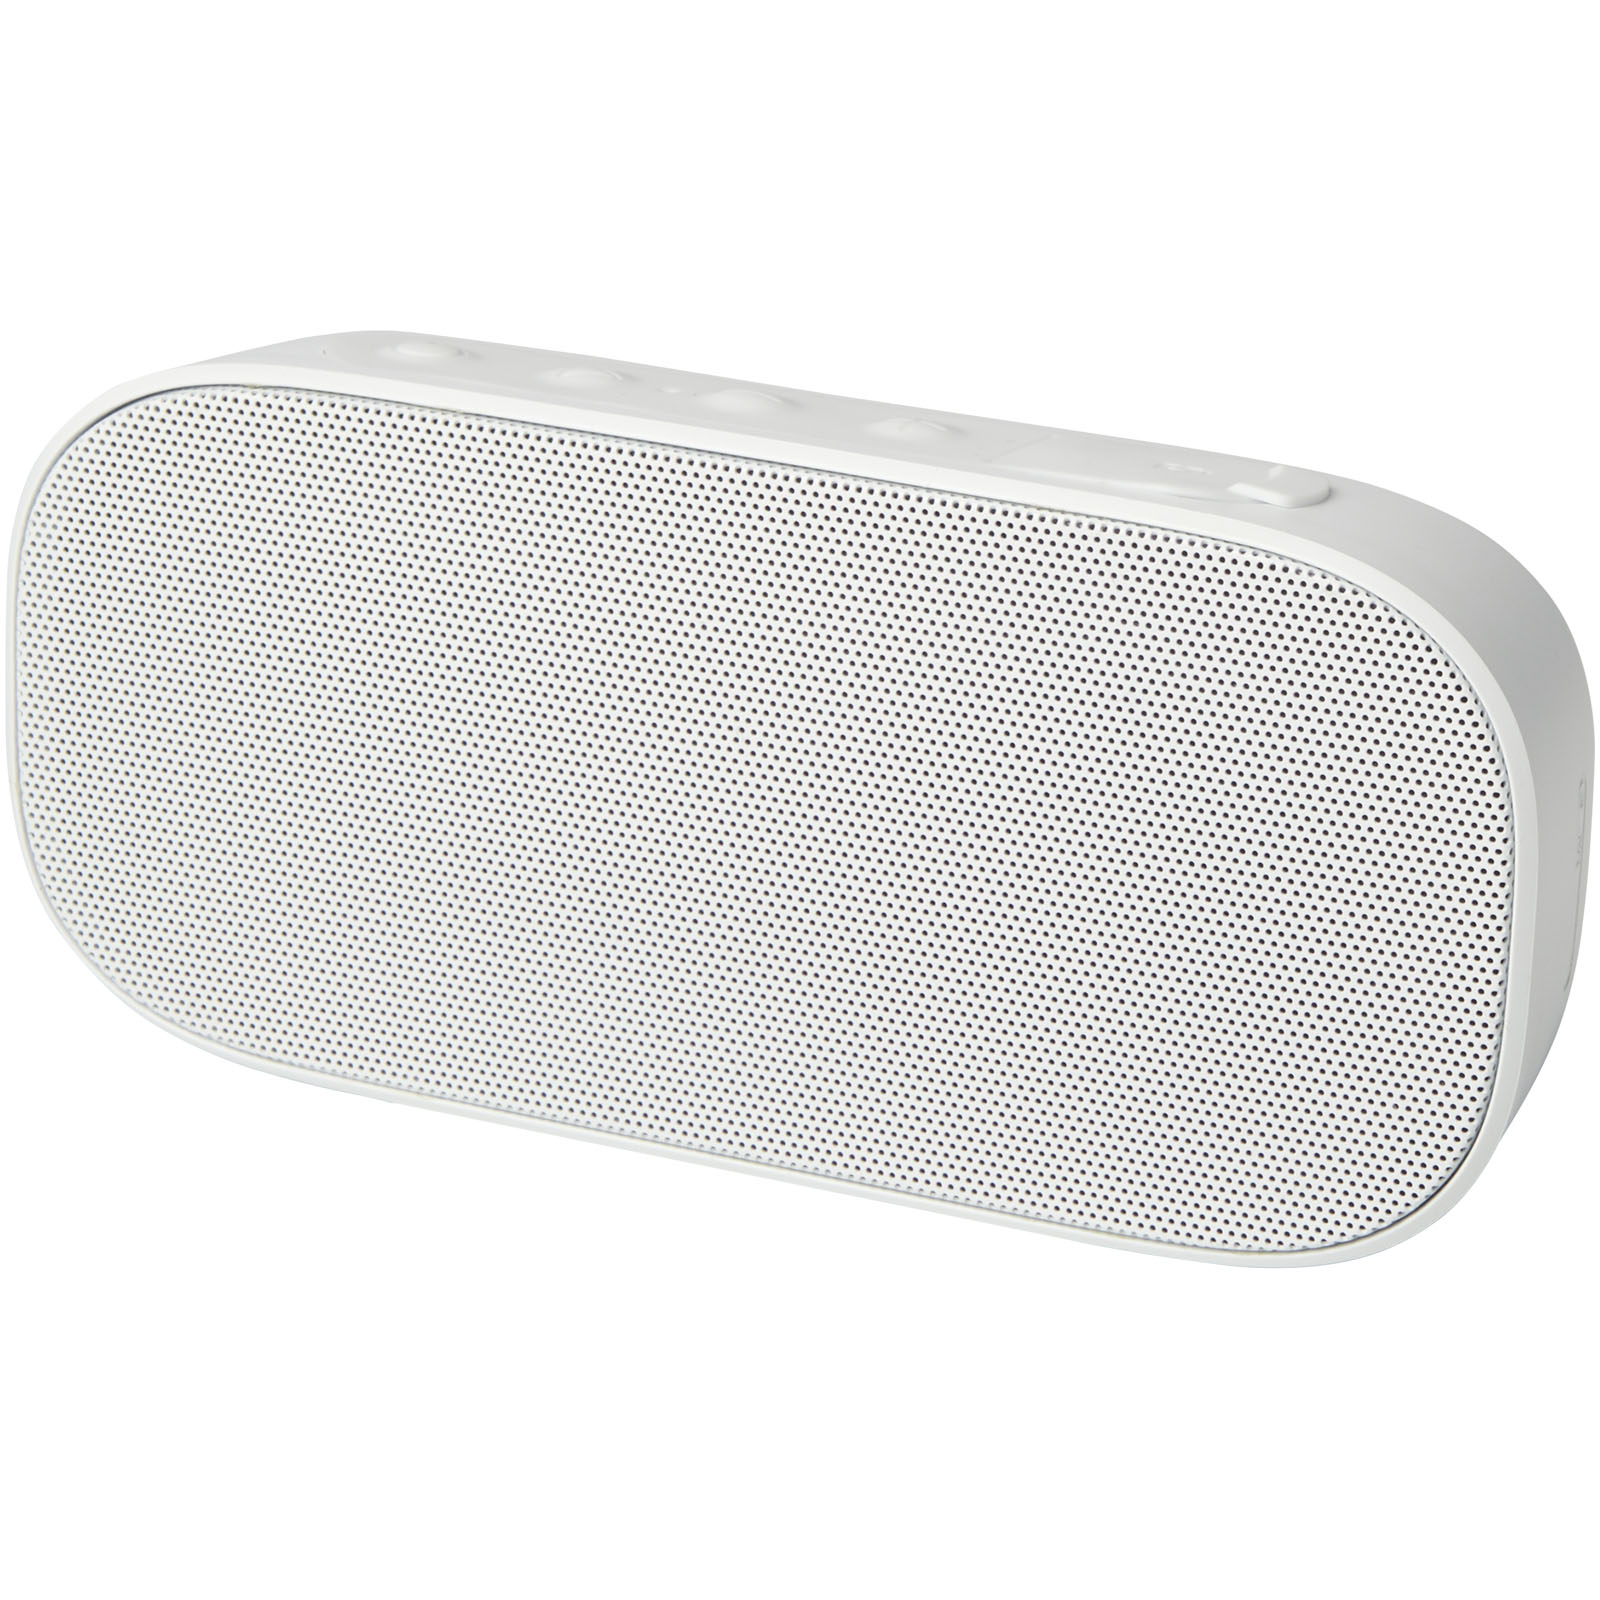 Advertising Speakers - Stark 2.0 5W recycled plastic IPX5 Bluetooth® speaker - 4